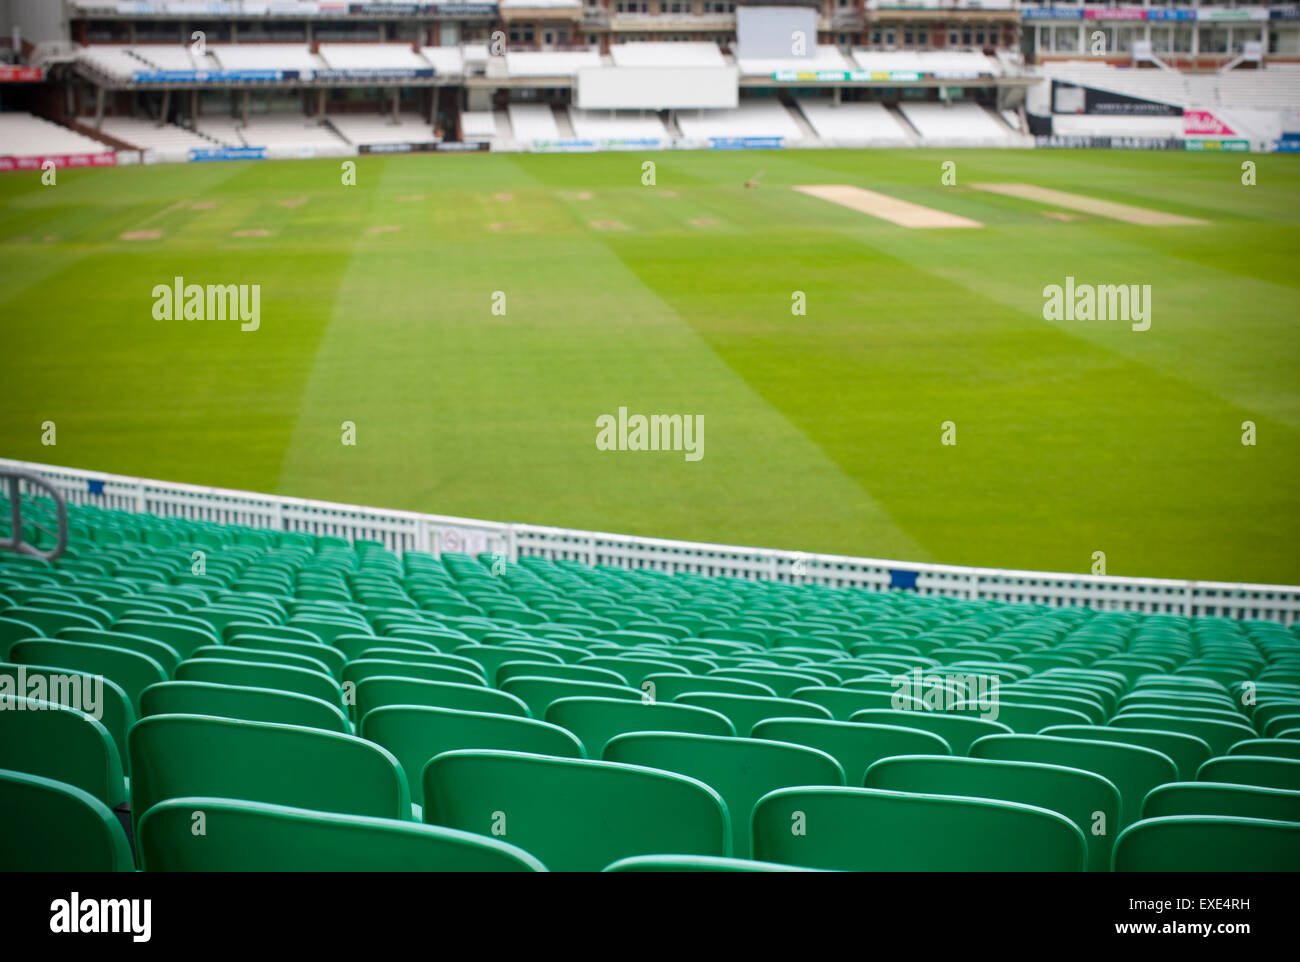 Oval Cricket Ground London Stock Photo